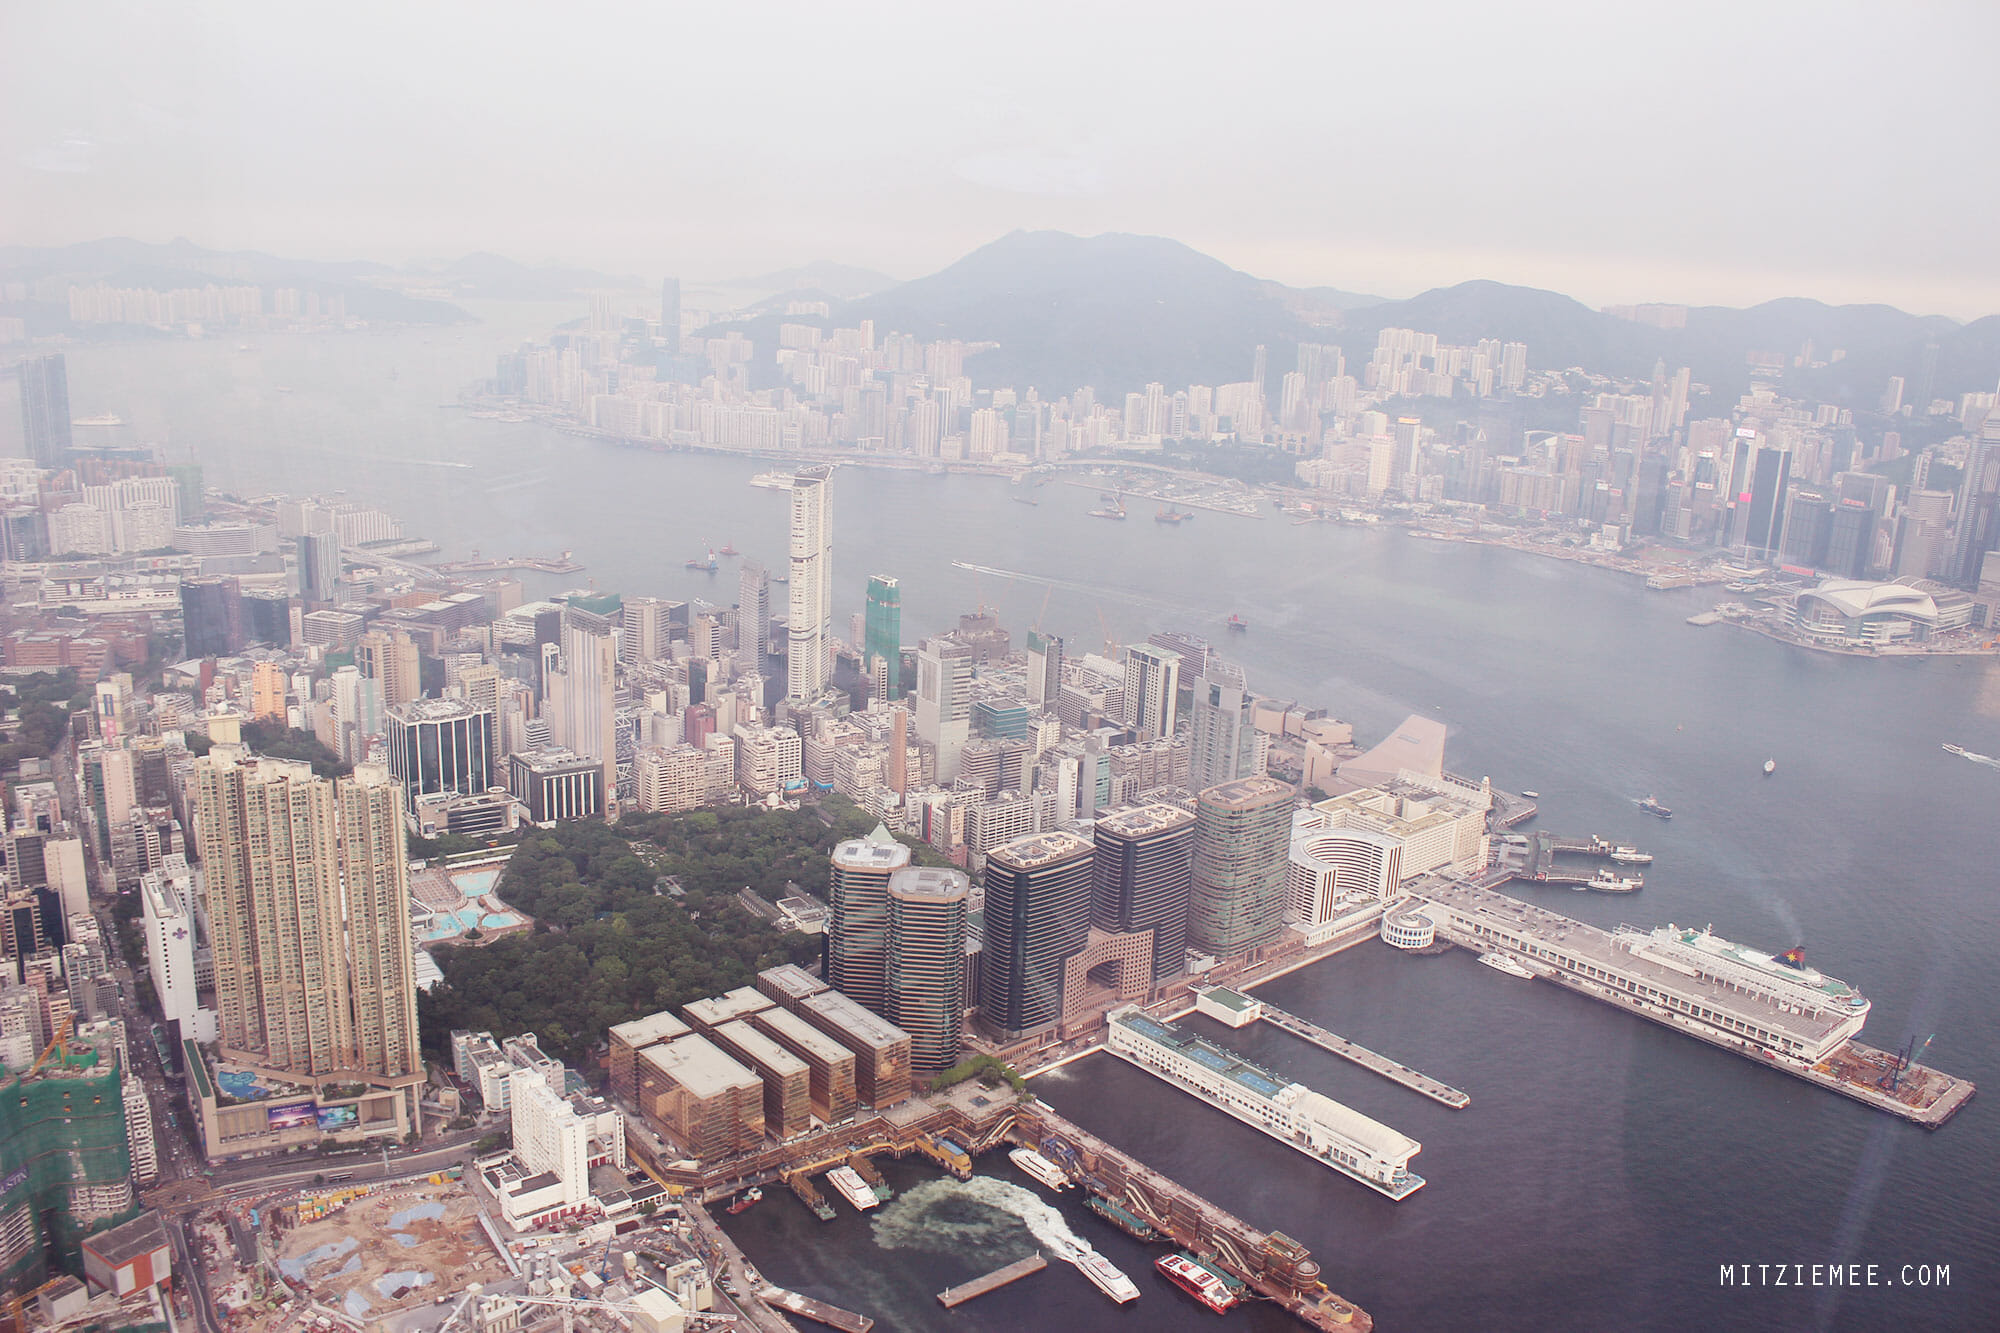 View from Ozone, Hong Kong